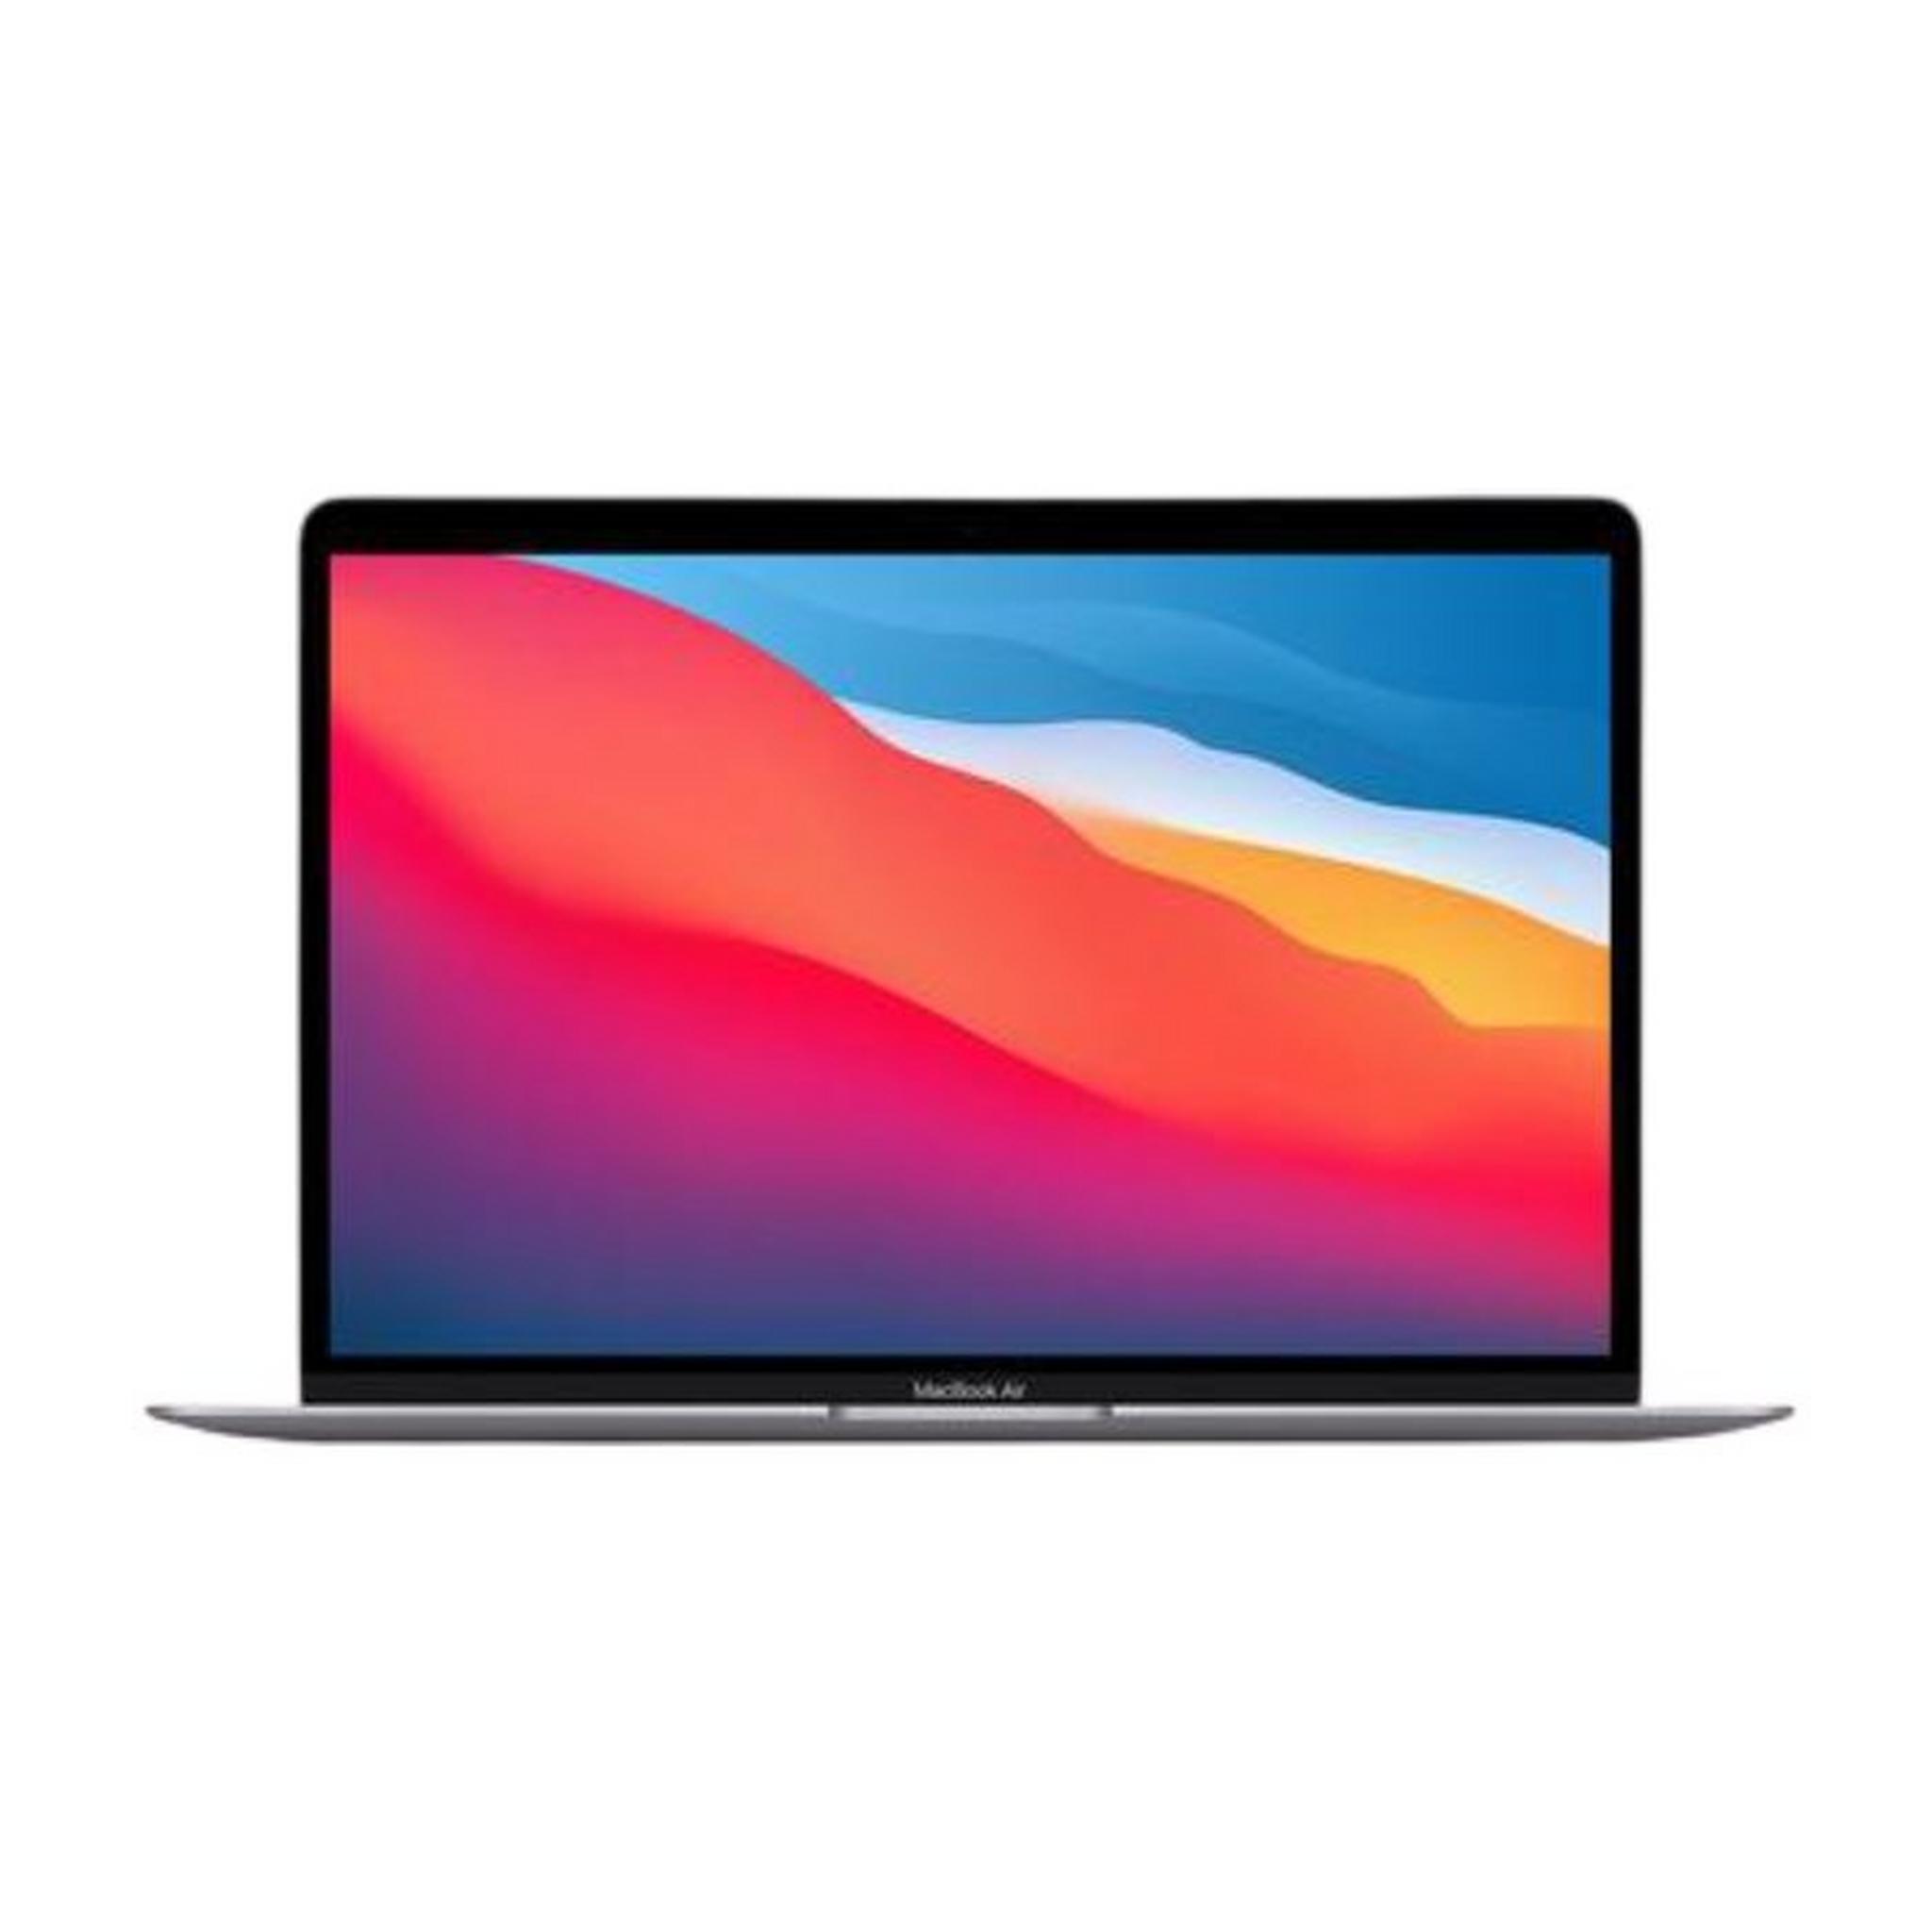 Apple Macbook Air M1, RAM 8GB  256GB SSD 13.3-inch (2020) - Space Grey